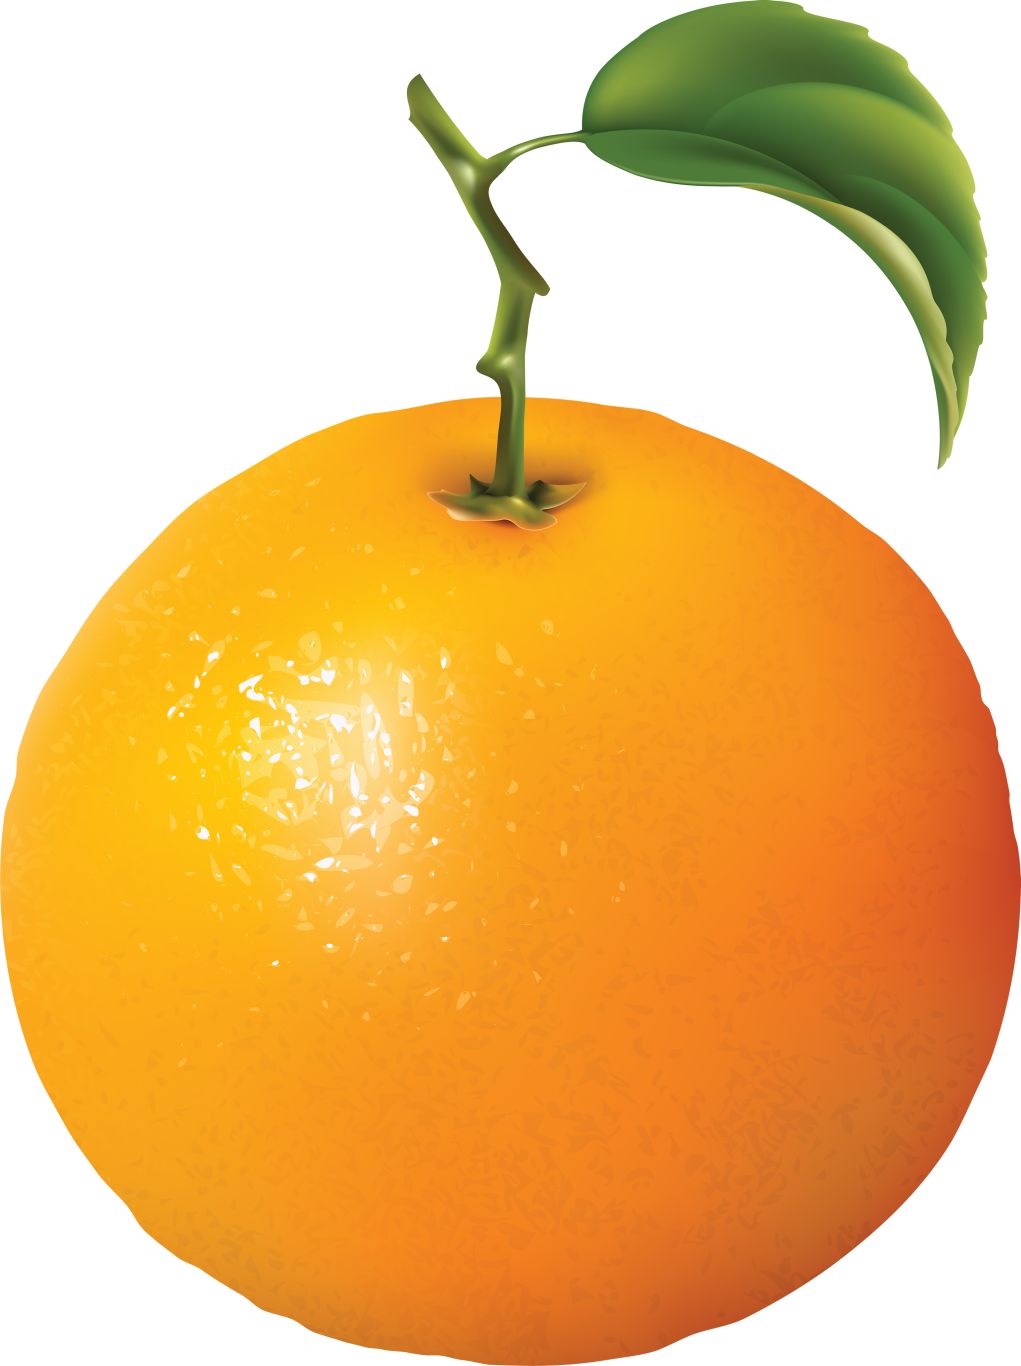 Orange PNG image with gree leaf    图片编号:772